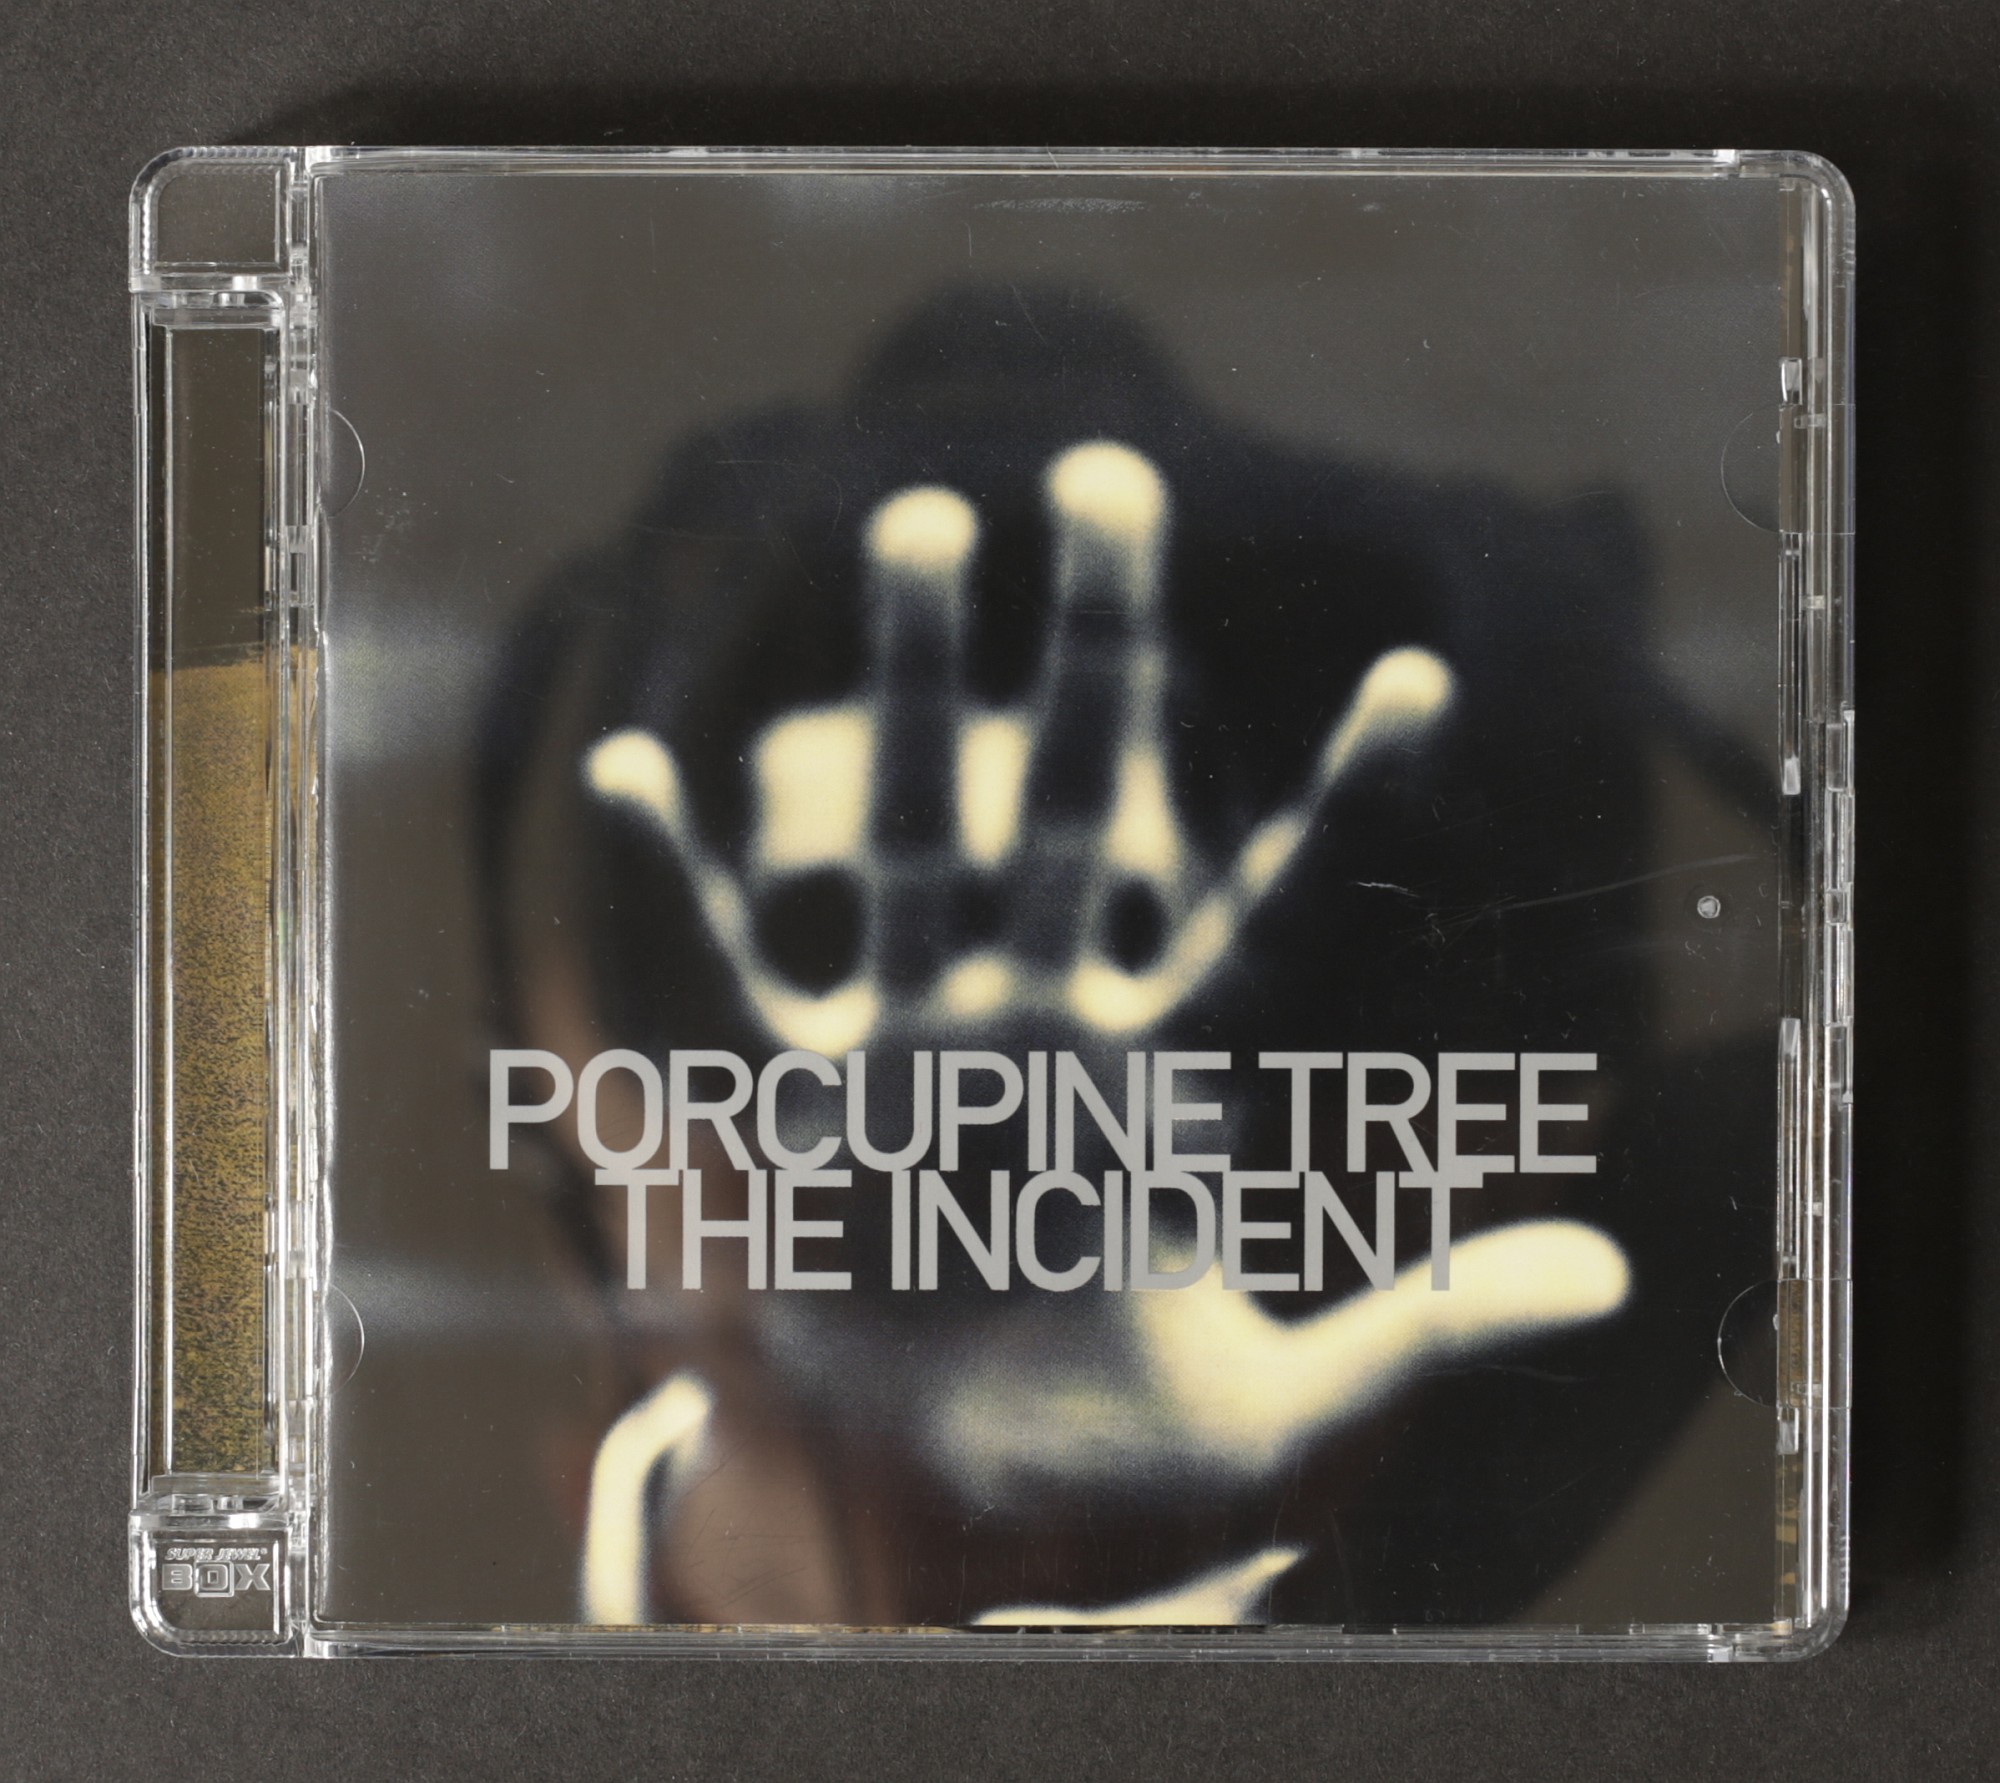 Porcupine Tree The Incident 5.1 Surround Mix DVD Audio